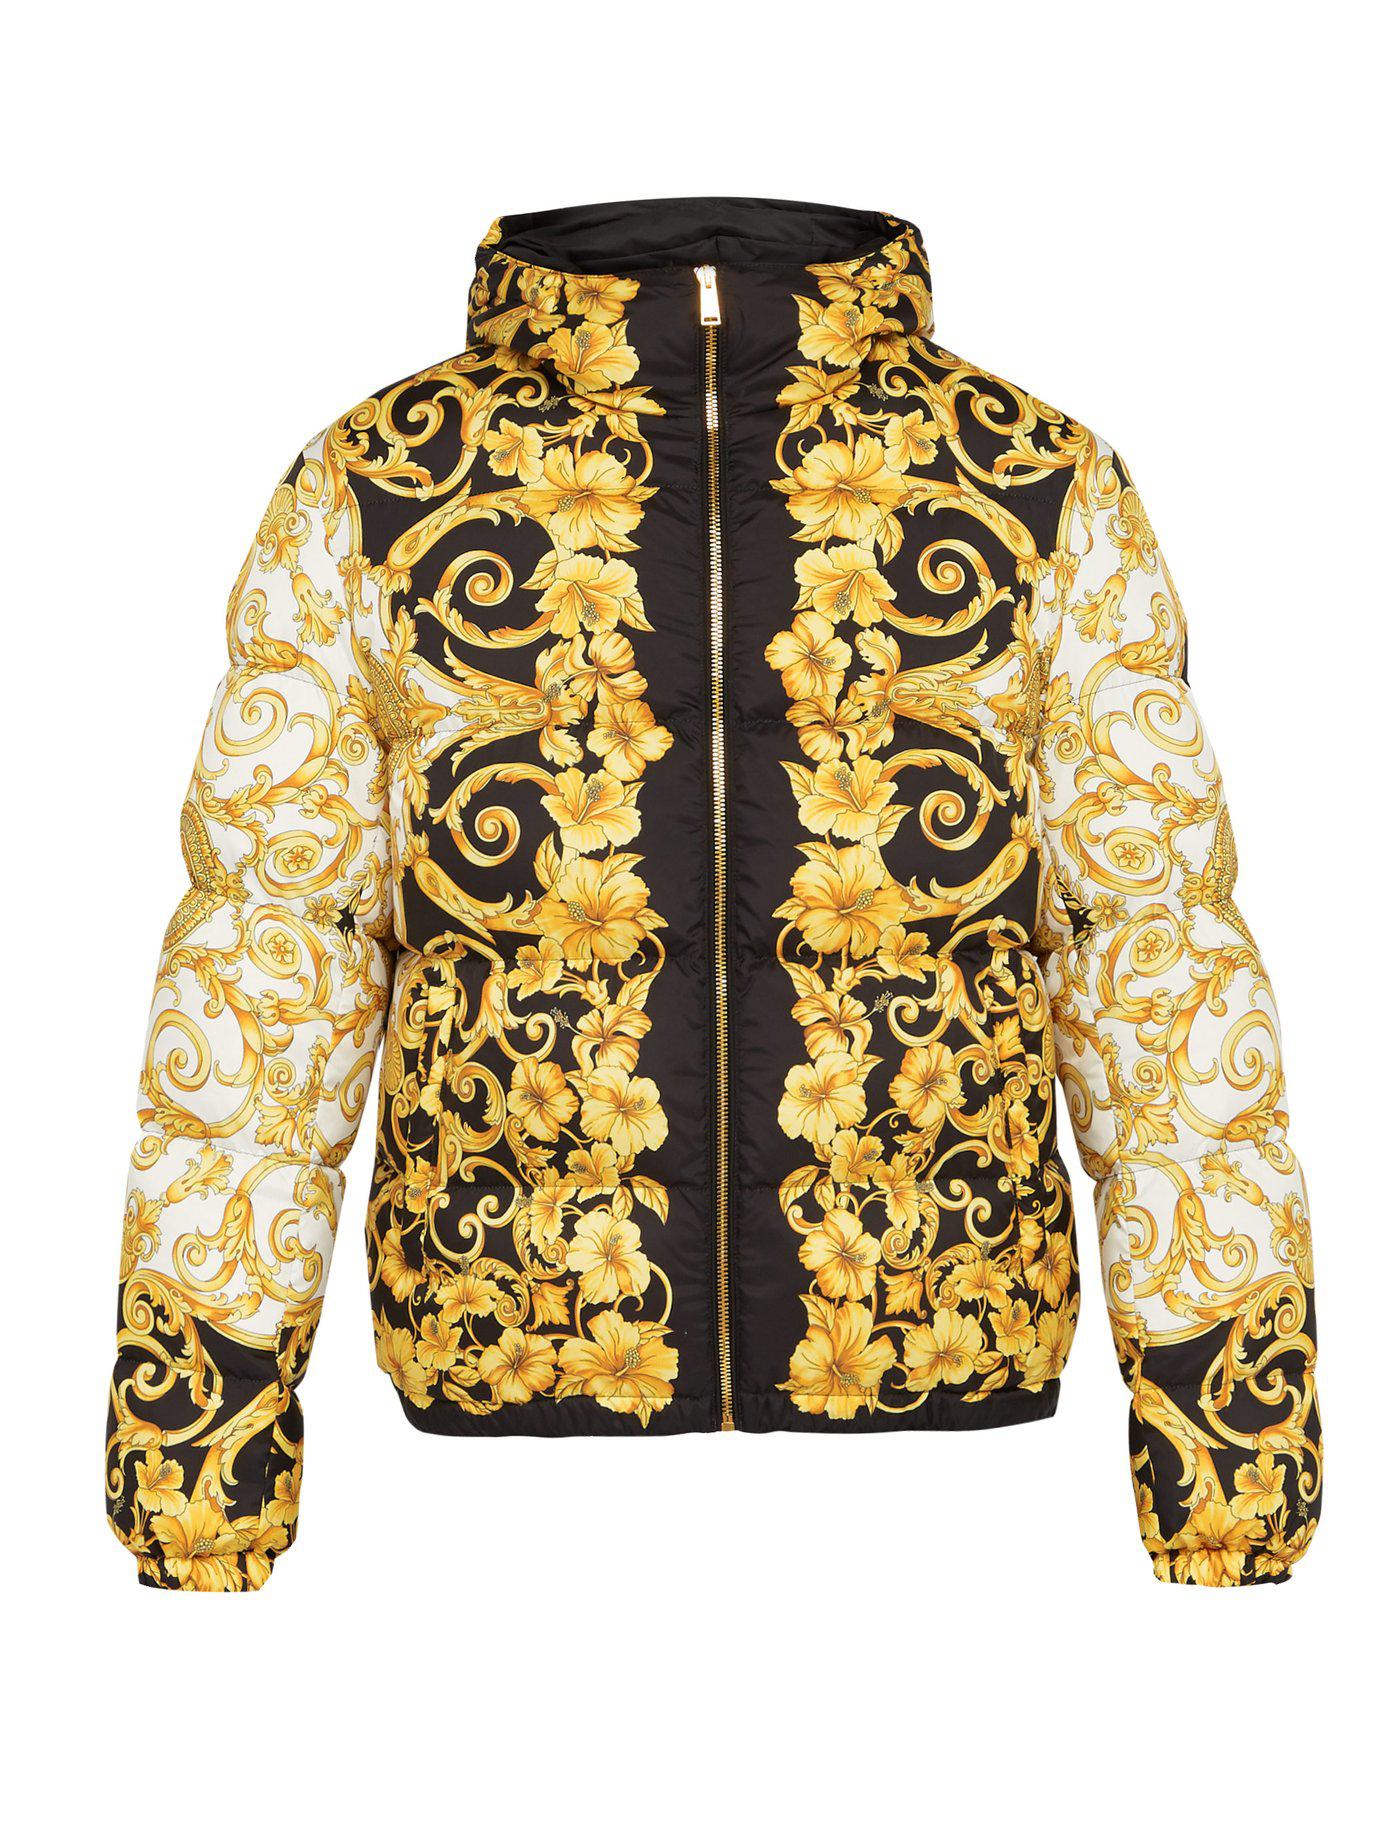 Versace Baroque Print Hooded Jacket for Men - Lyst